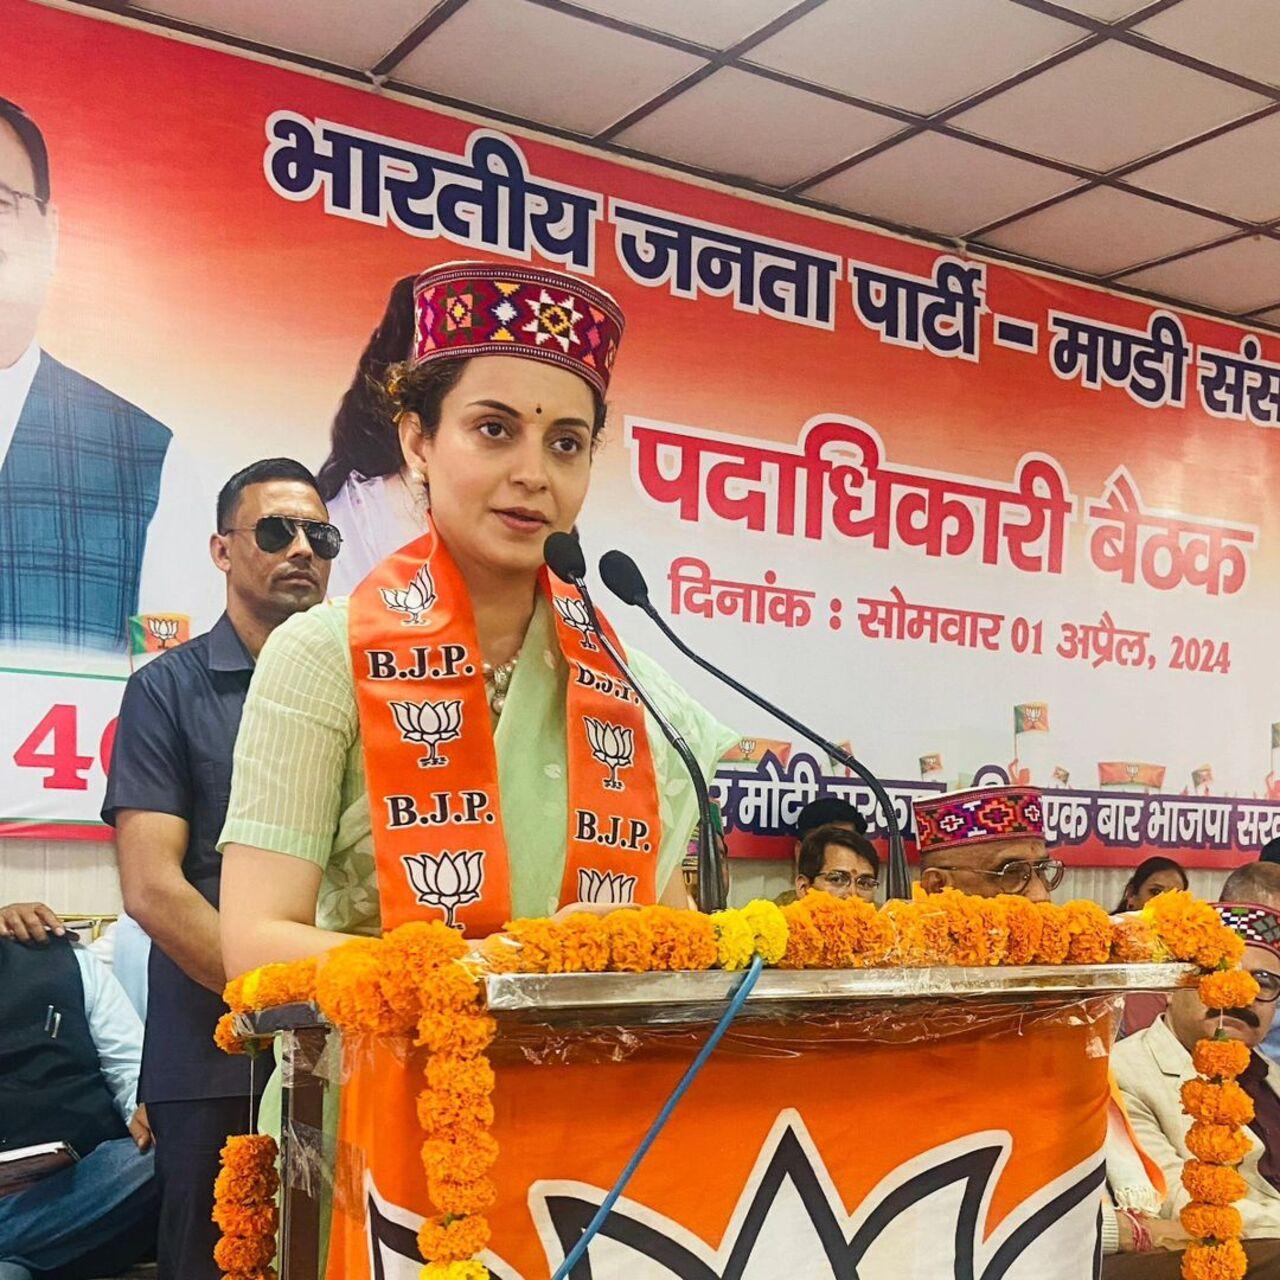 Making her debut into politics, Kangana Ranaut will be contesting for BJP from her hometown Mandi in Himachal Pradesh